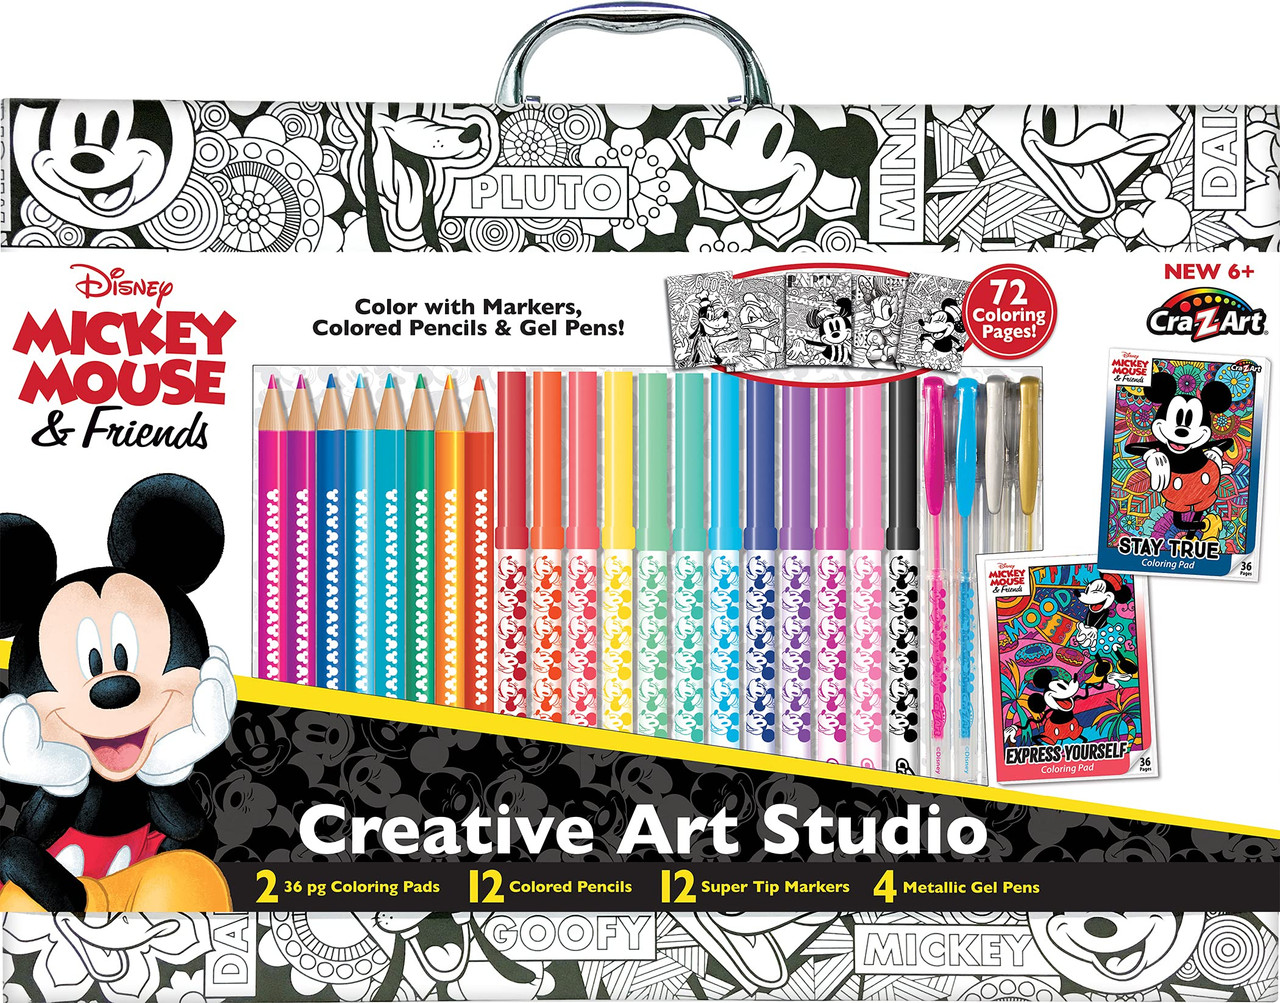 Disney Scrapbook Album & Organizer Kit Mickey Mouse & Friends 350 Pieces  New